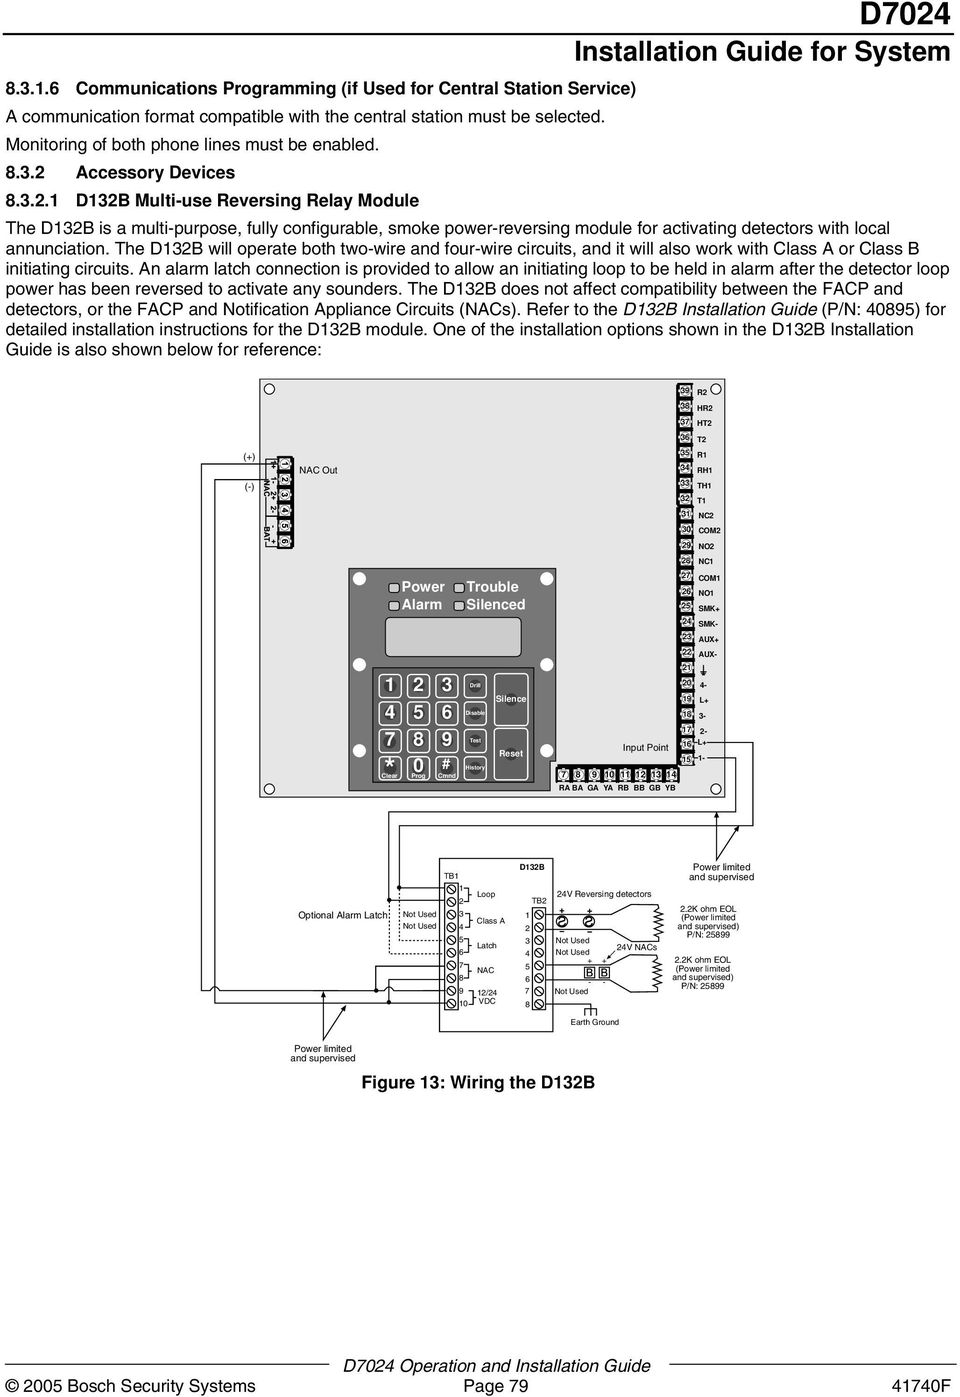 radionix d285th wiring diagram